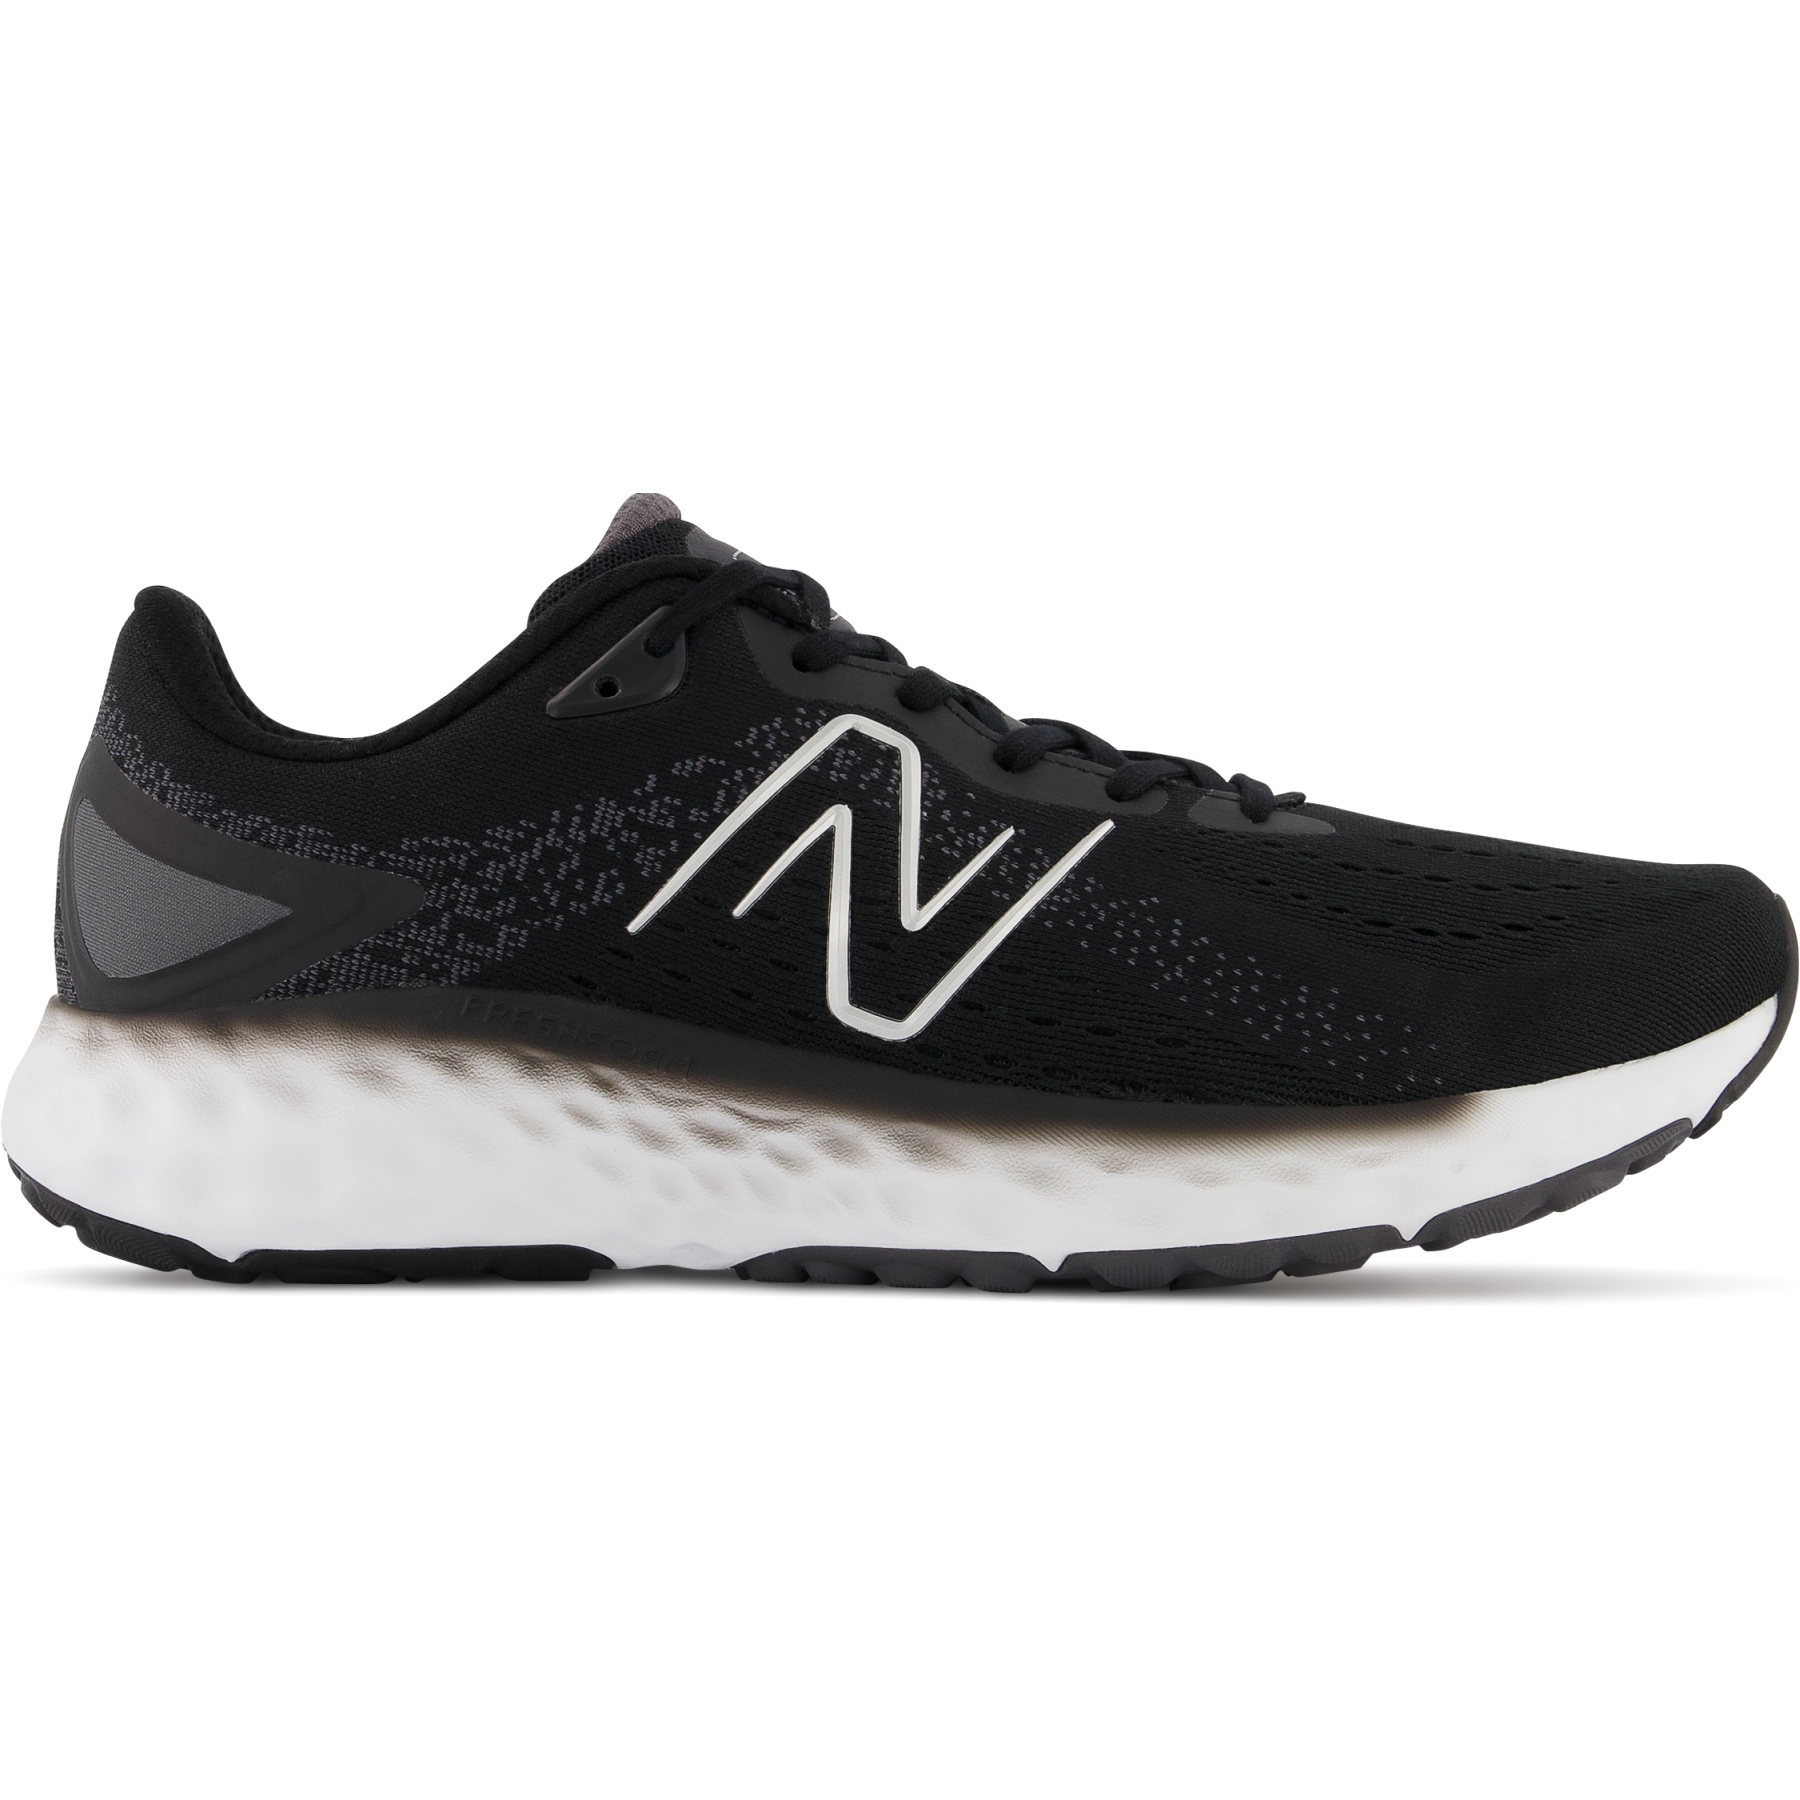 Picture of New Balance Fresh Foam Evoz v2 Running Shoes - Black/White